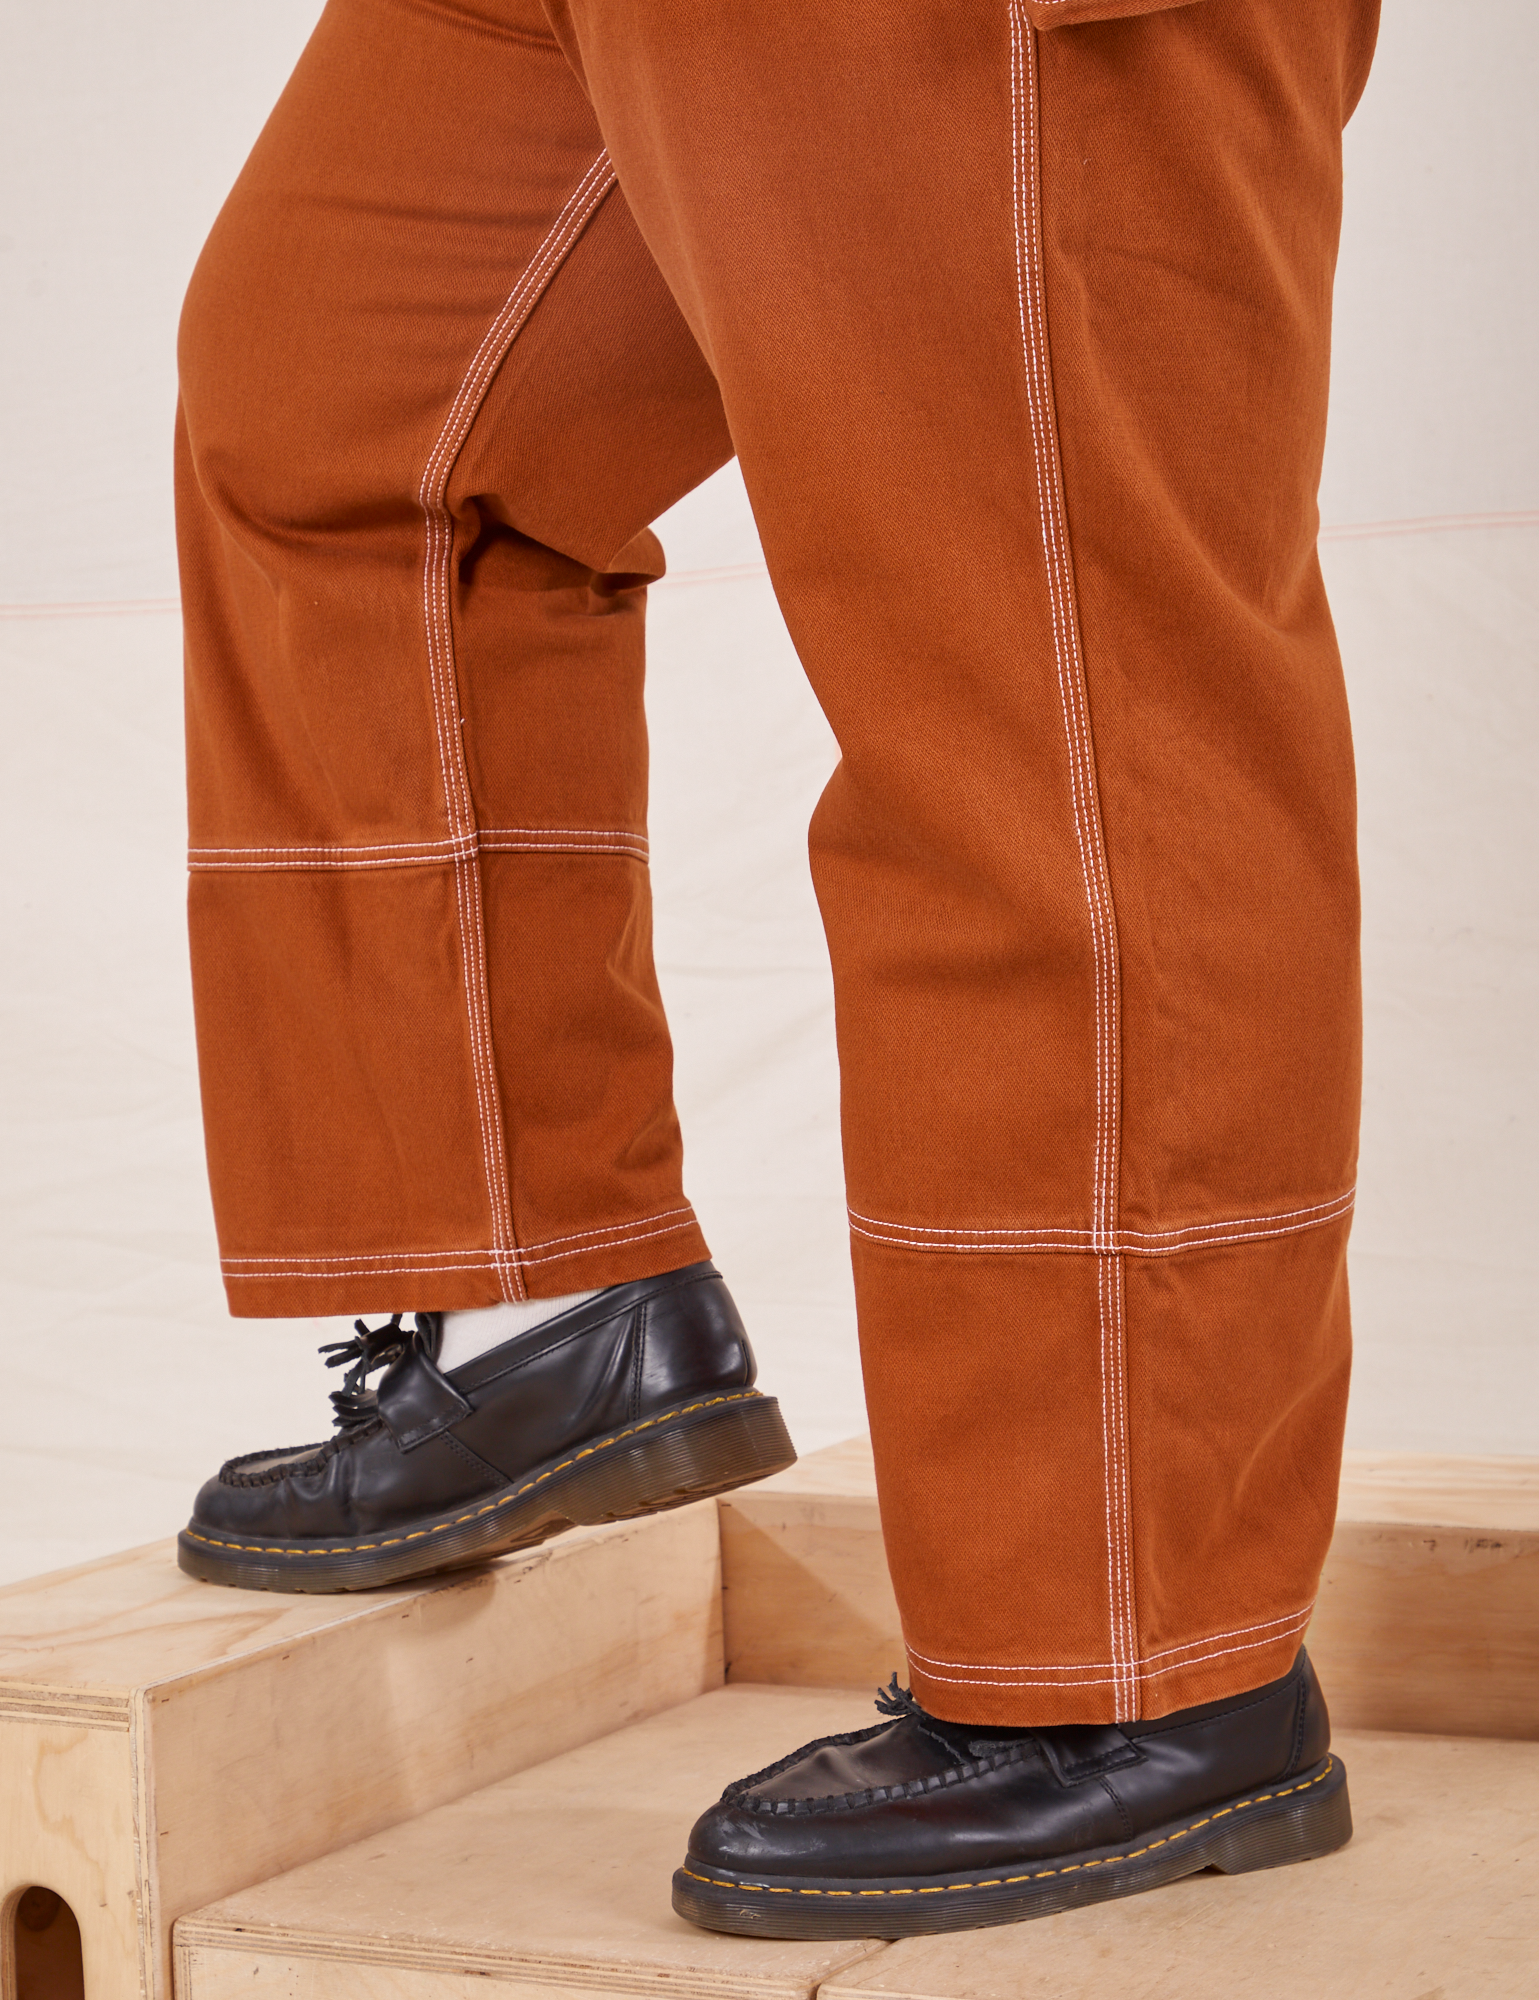 Carpenter Jeans in Burnt Terracotta side close up on Sam